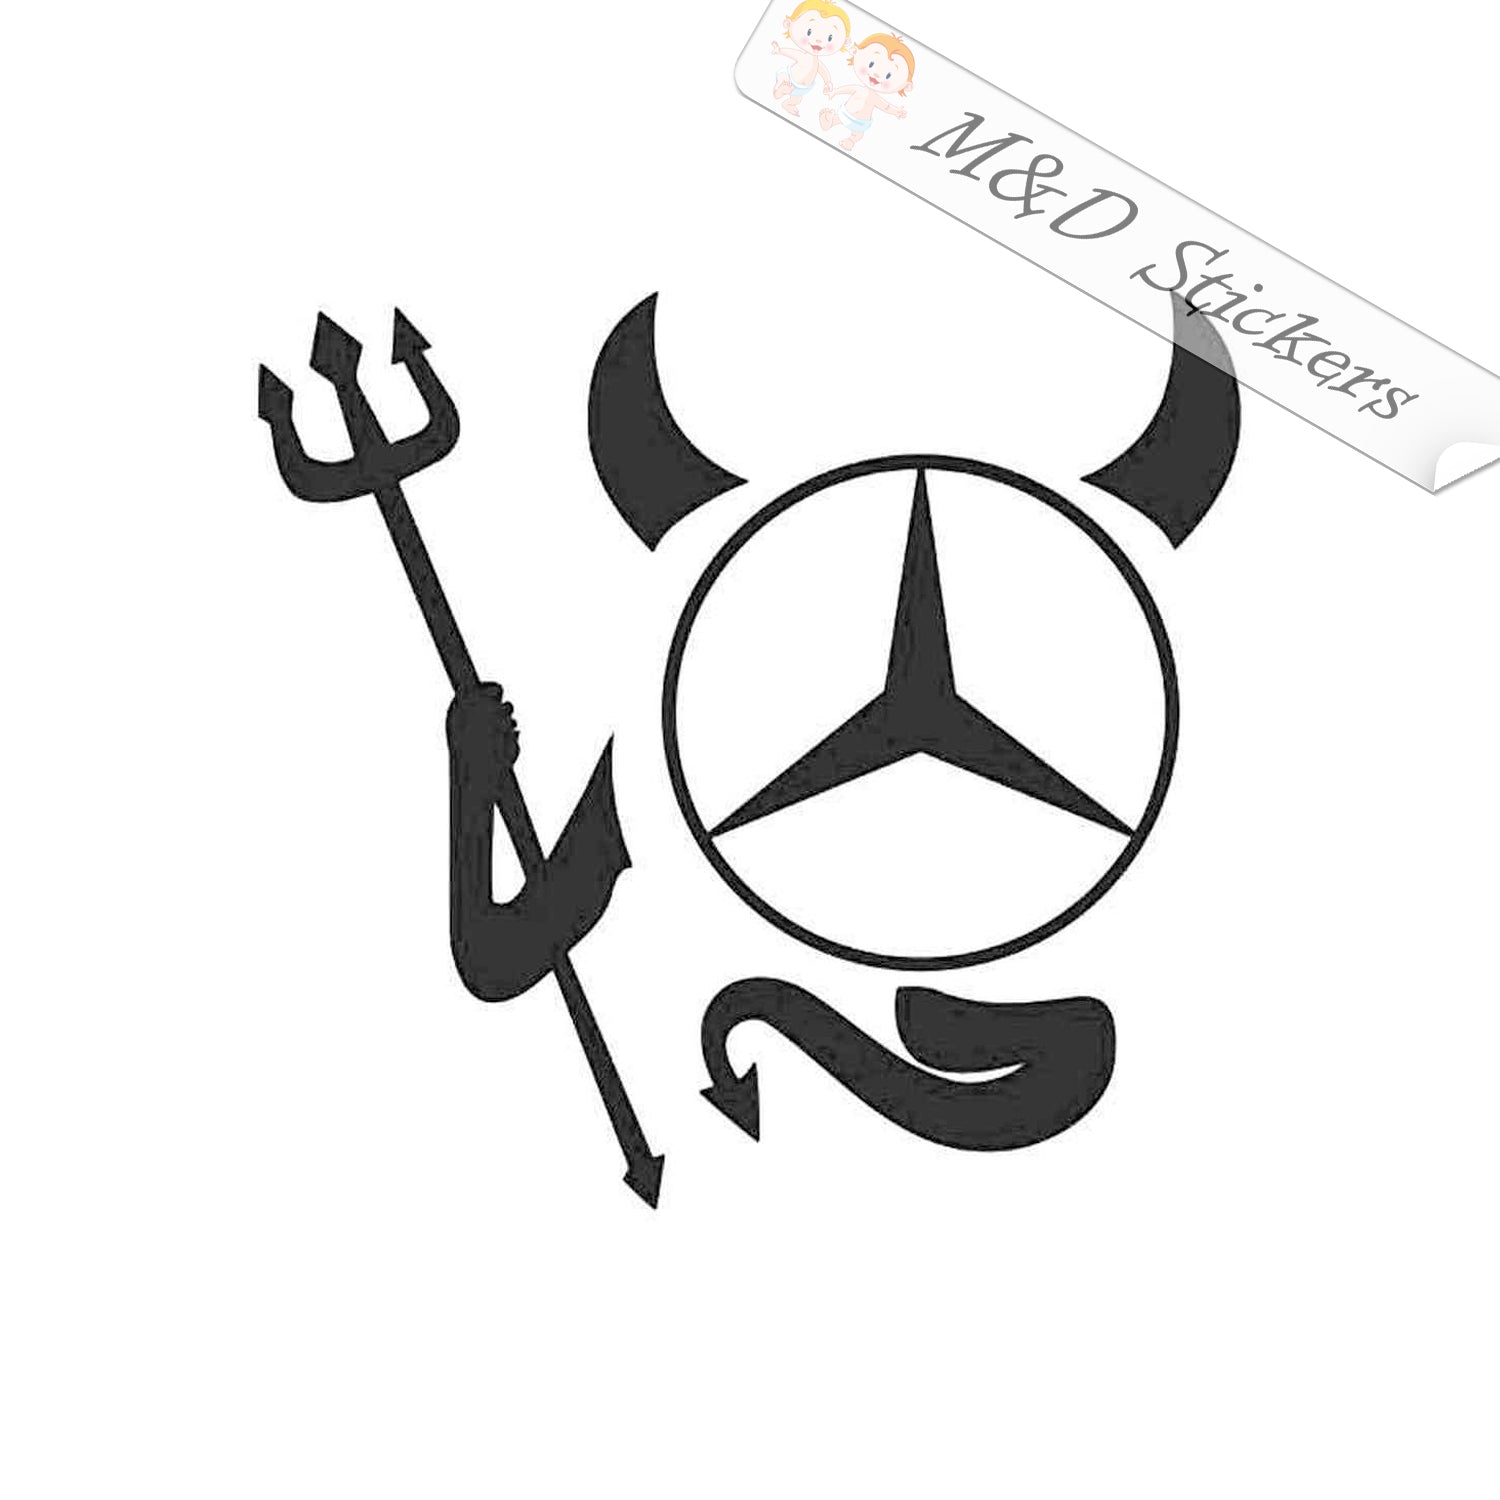 Mercedes Logo. Wall decal emblem.